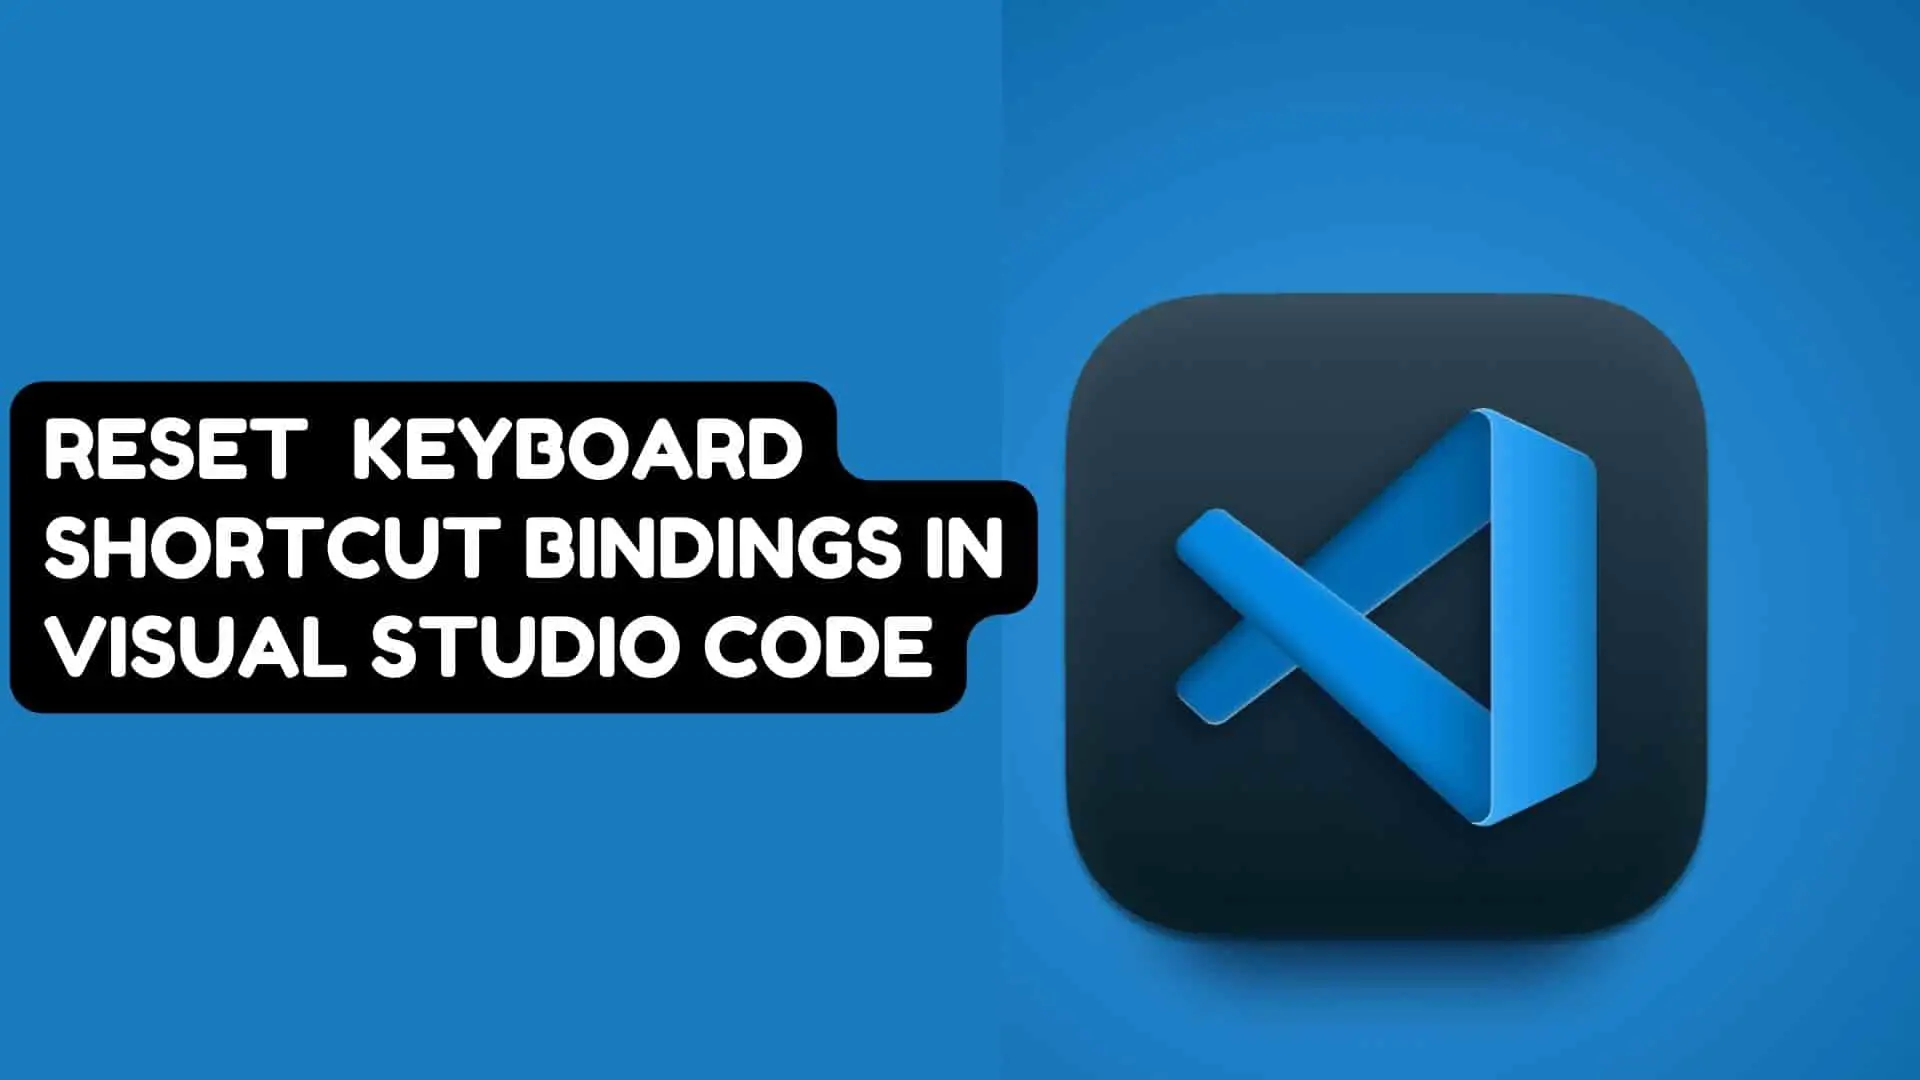 Reset Keyboard Shortcut Bindings in Visual Studio Code